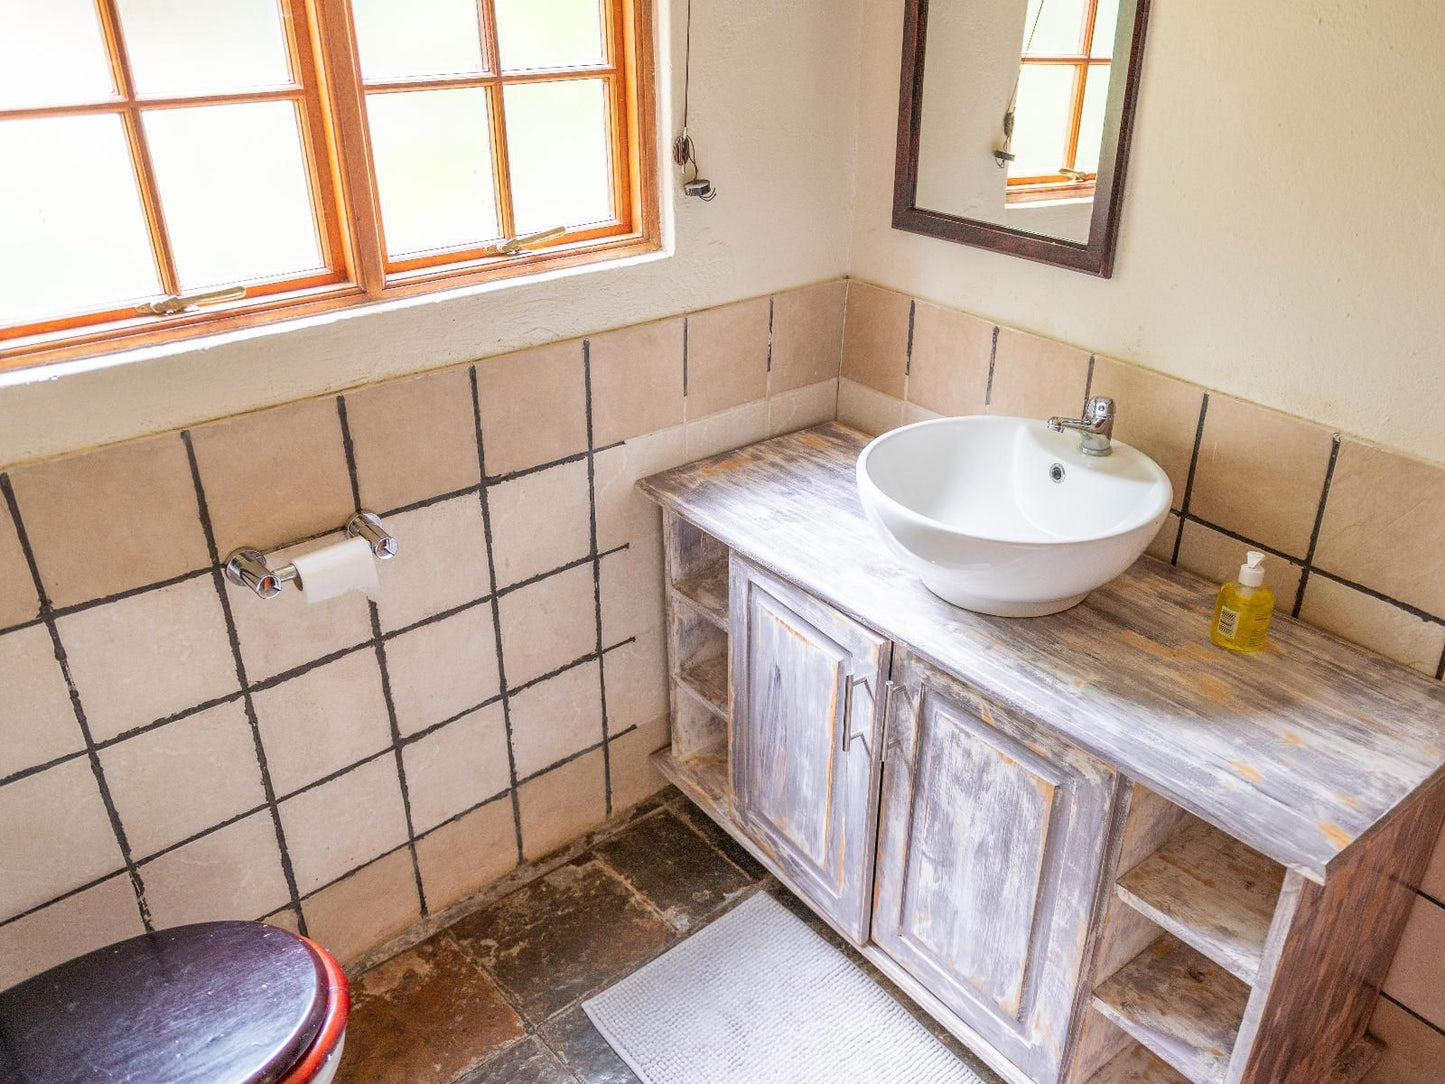 Bushriver Lodge Hoedspruit Limpopo Province South Africa Bathroom